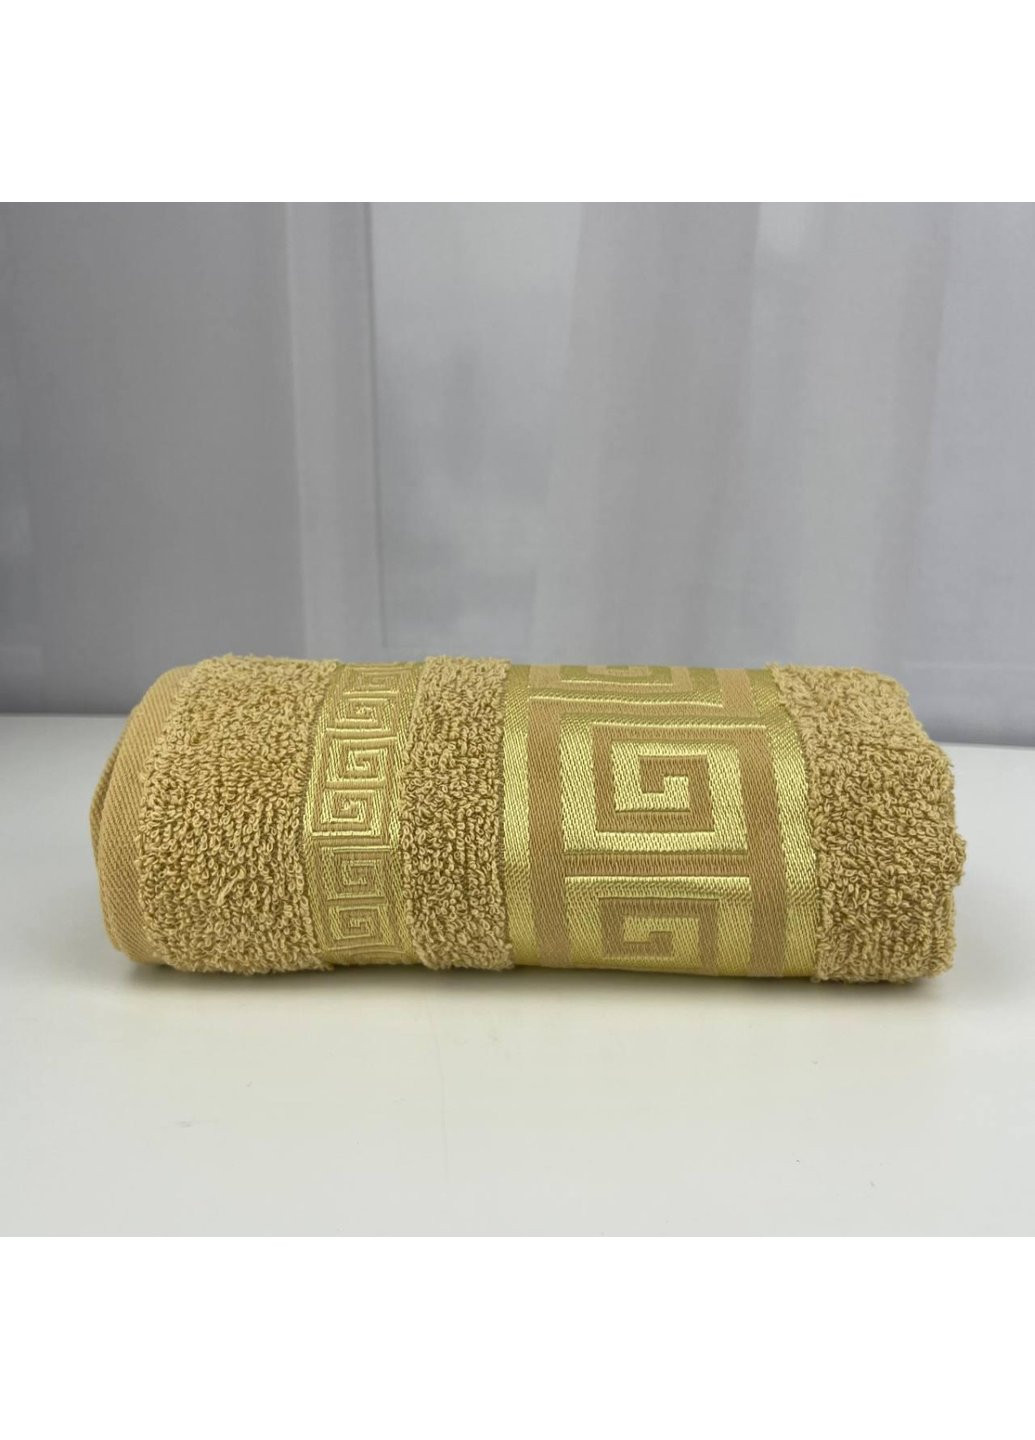 Power полотенце для лица махровое febo vip cotton grek турция 6386 желтое 50х90 см комбинированный производство - Турция